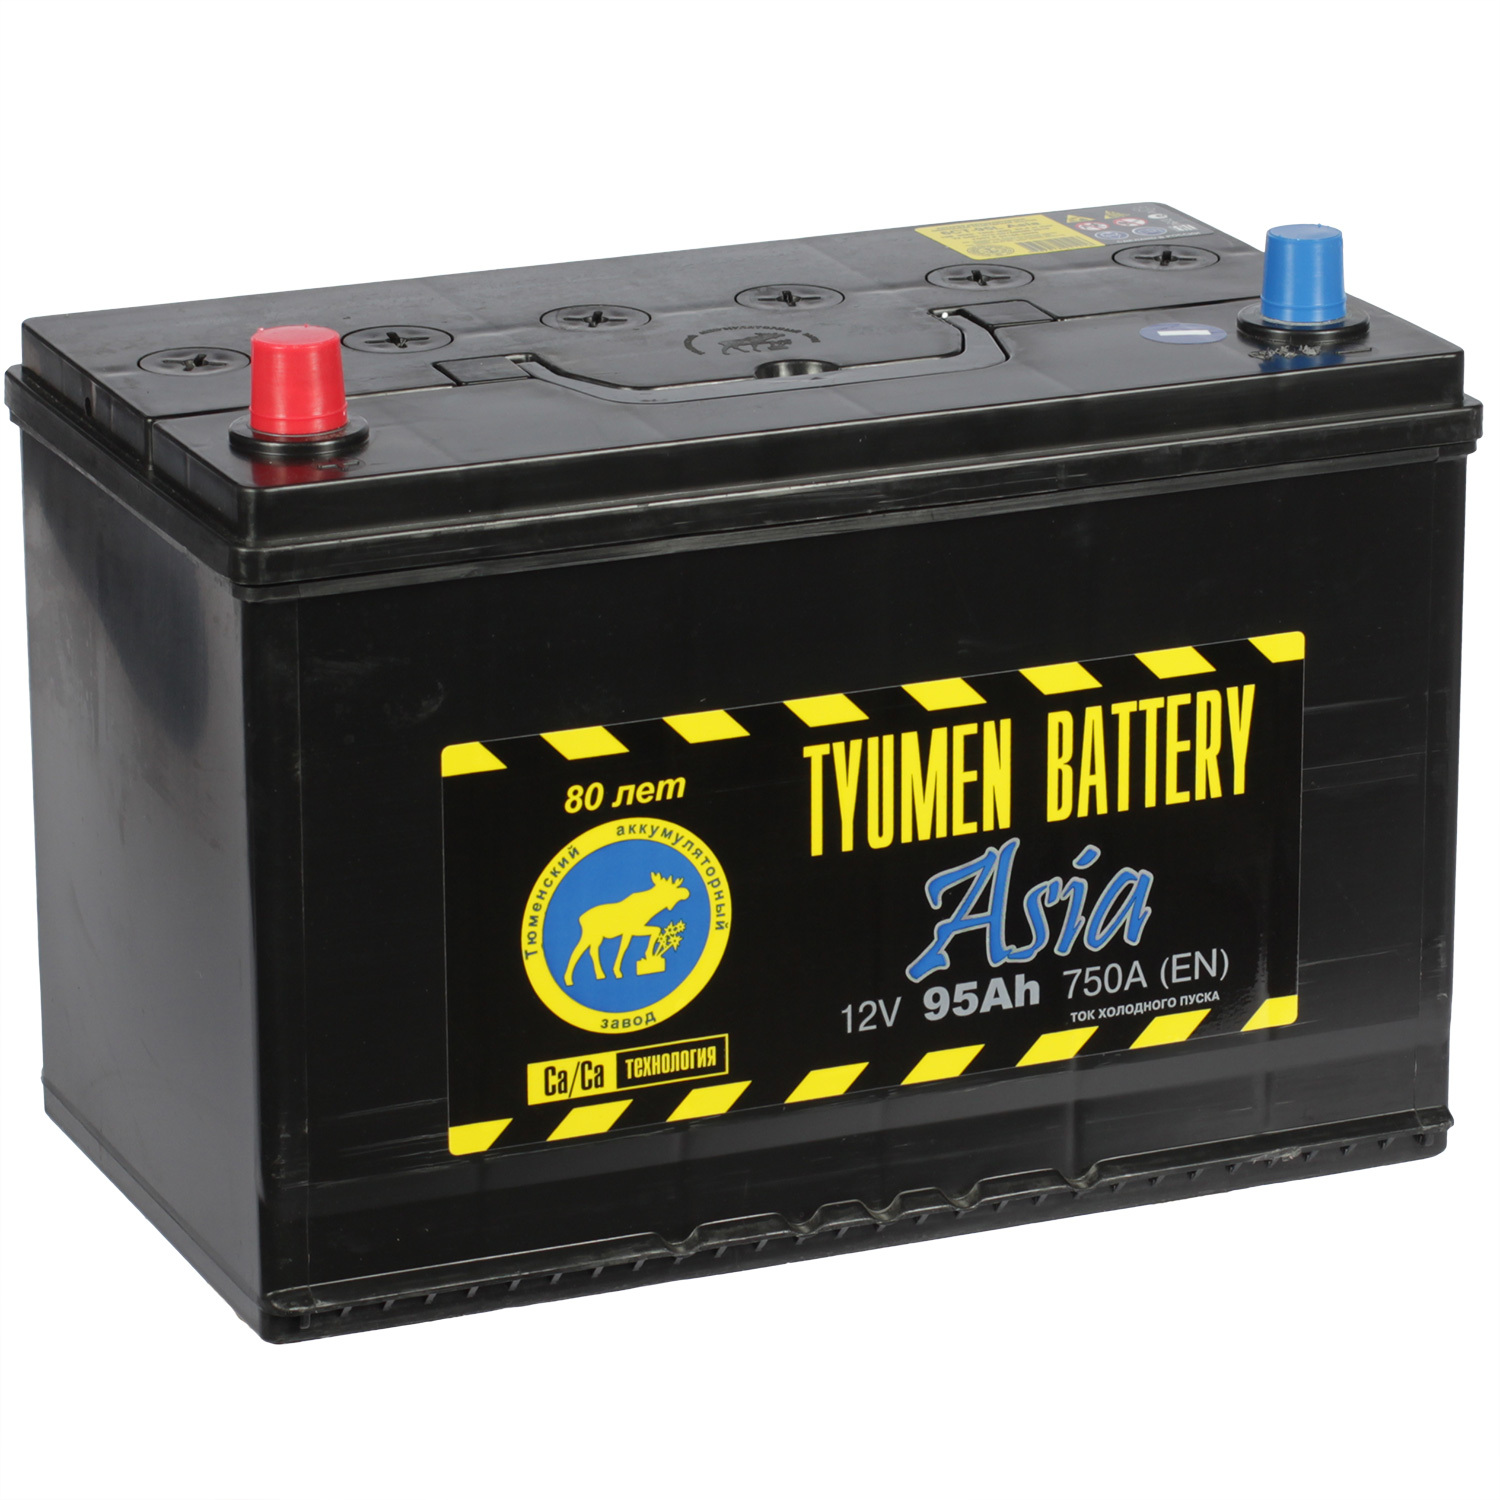 Tyumen Battery Автомобильный аккумулятор Tyumen Battery 95 Ач прямая полярность D31R tyumen battery автомобильный аккумулятор tyumen battery 65 ач обратная полярность d23l